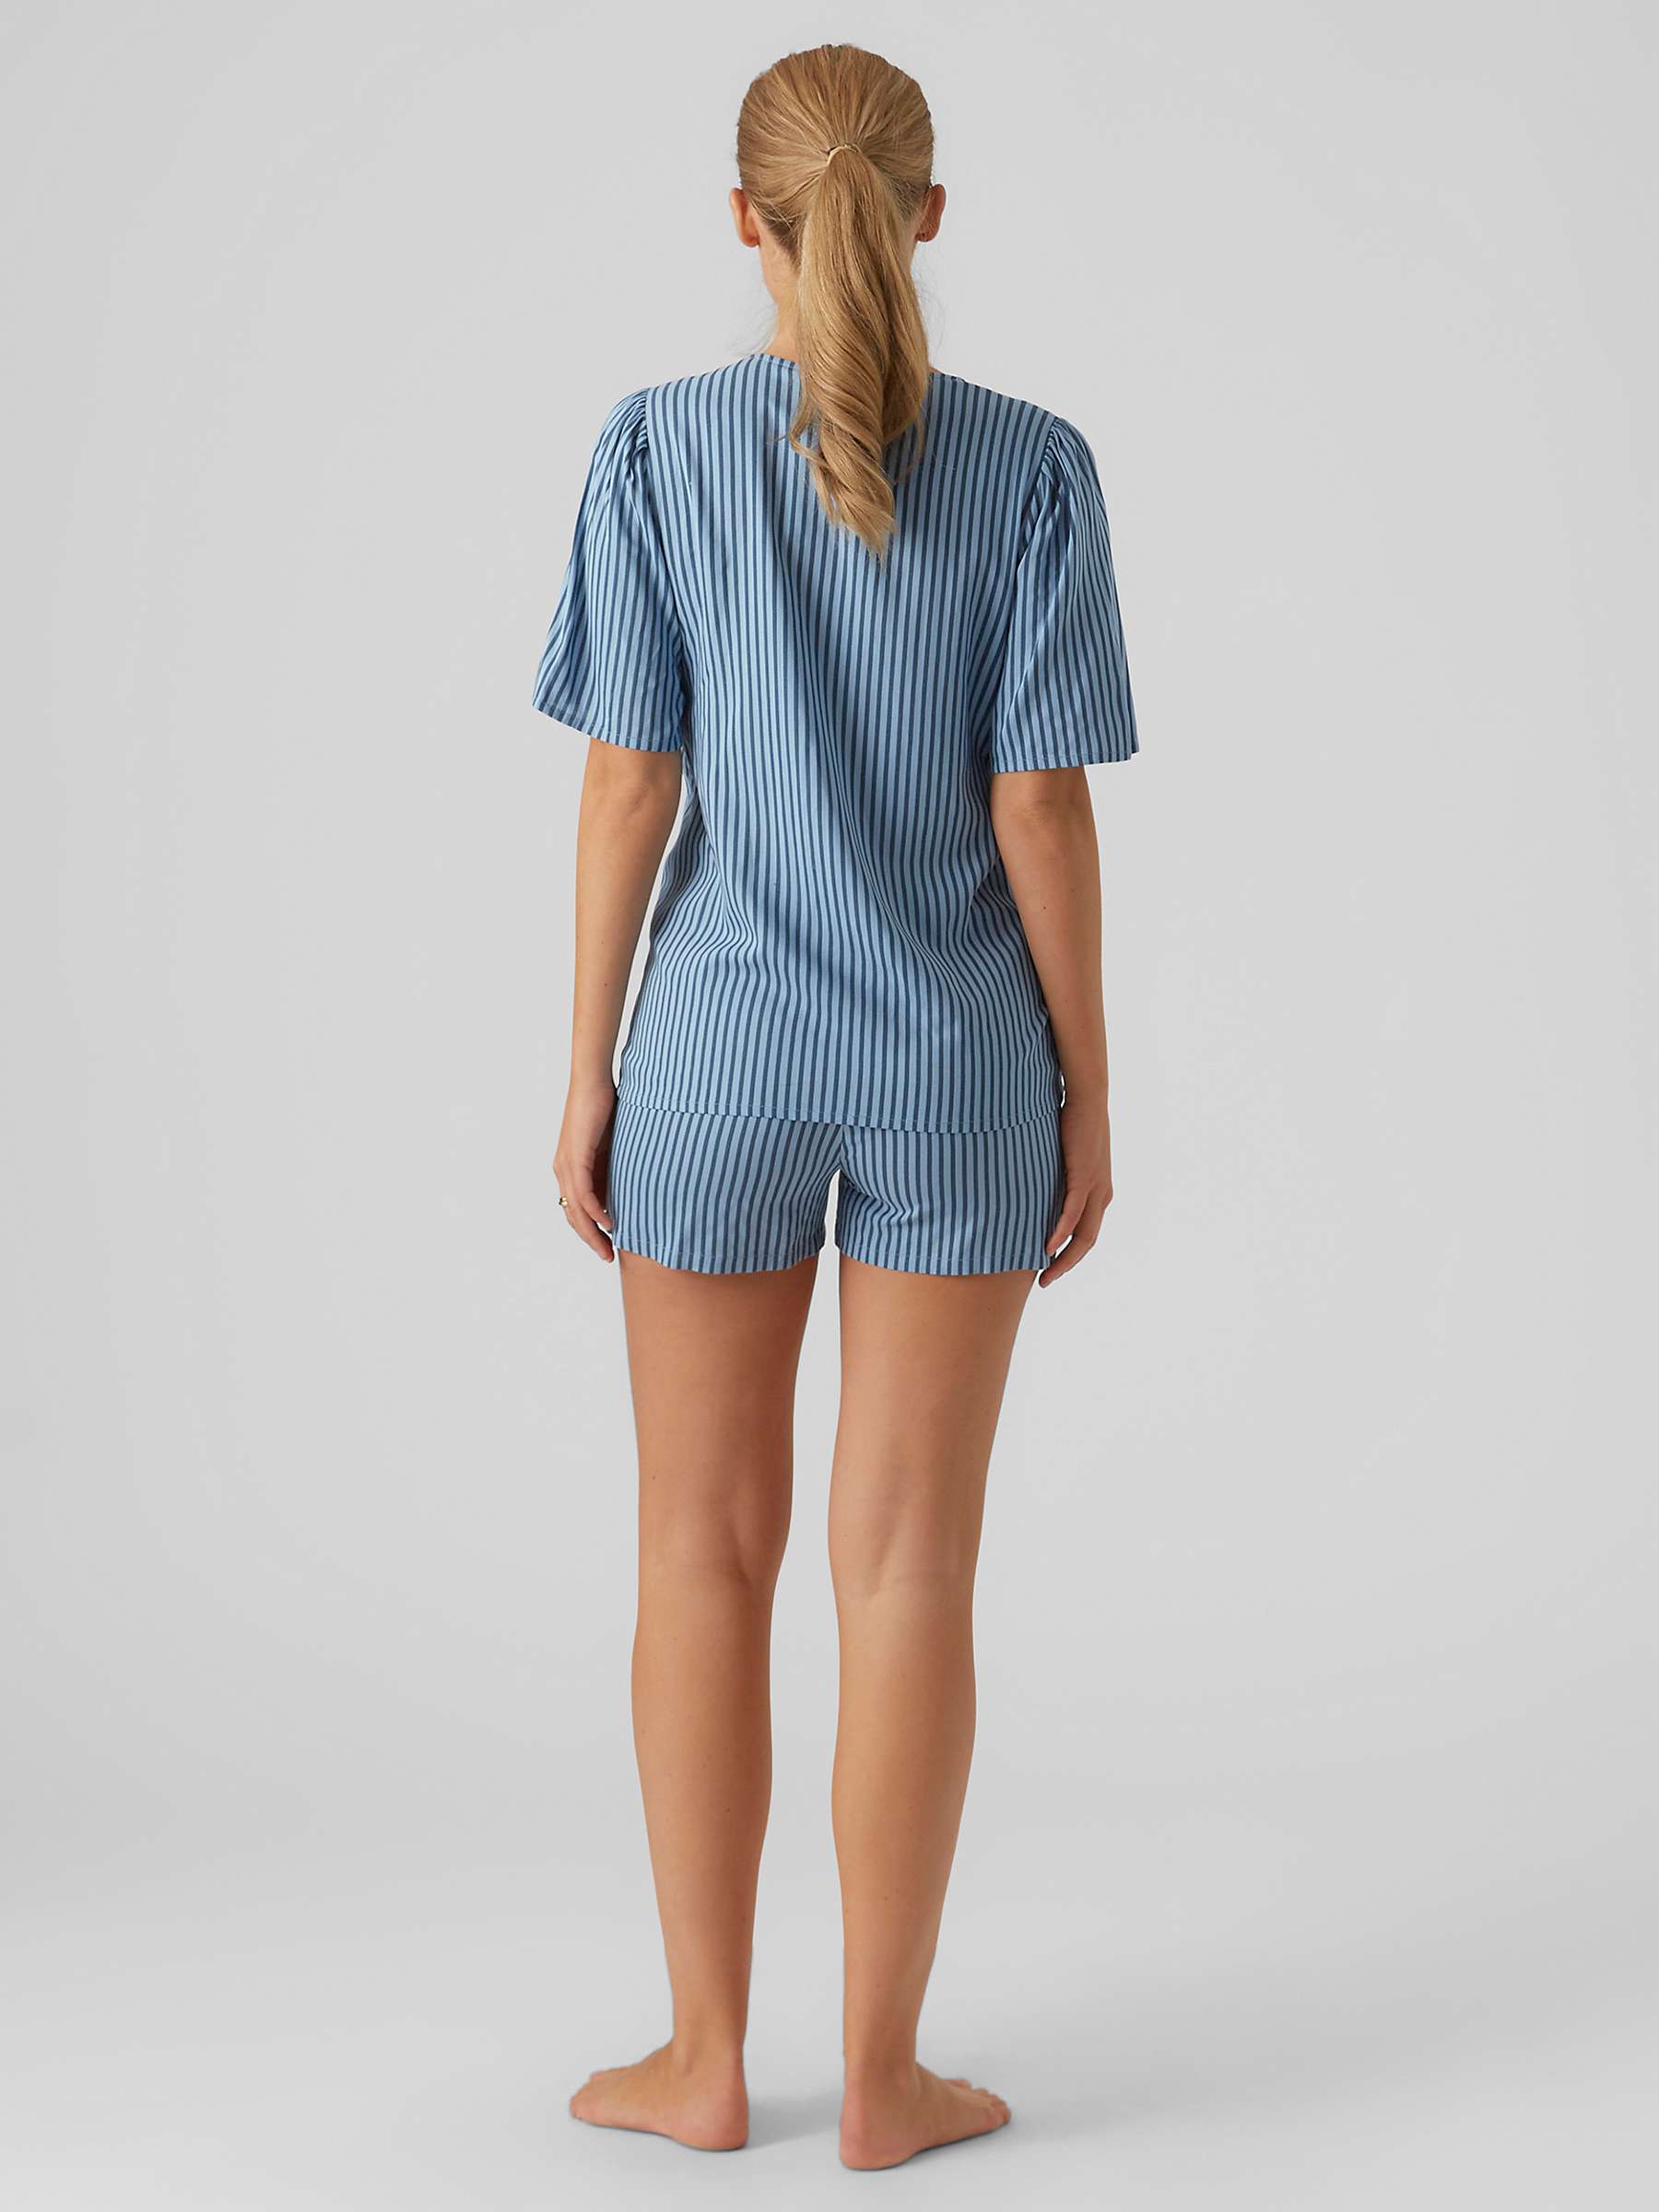 Buy Mamalicious Jasmin Short Shirt Maternity Pyjama Set Online at johnlewis.com